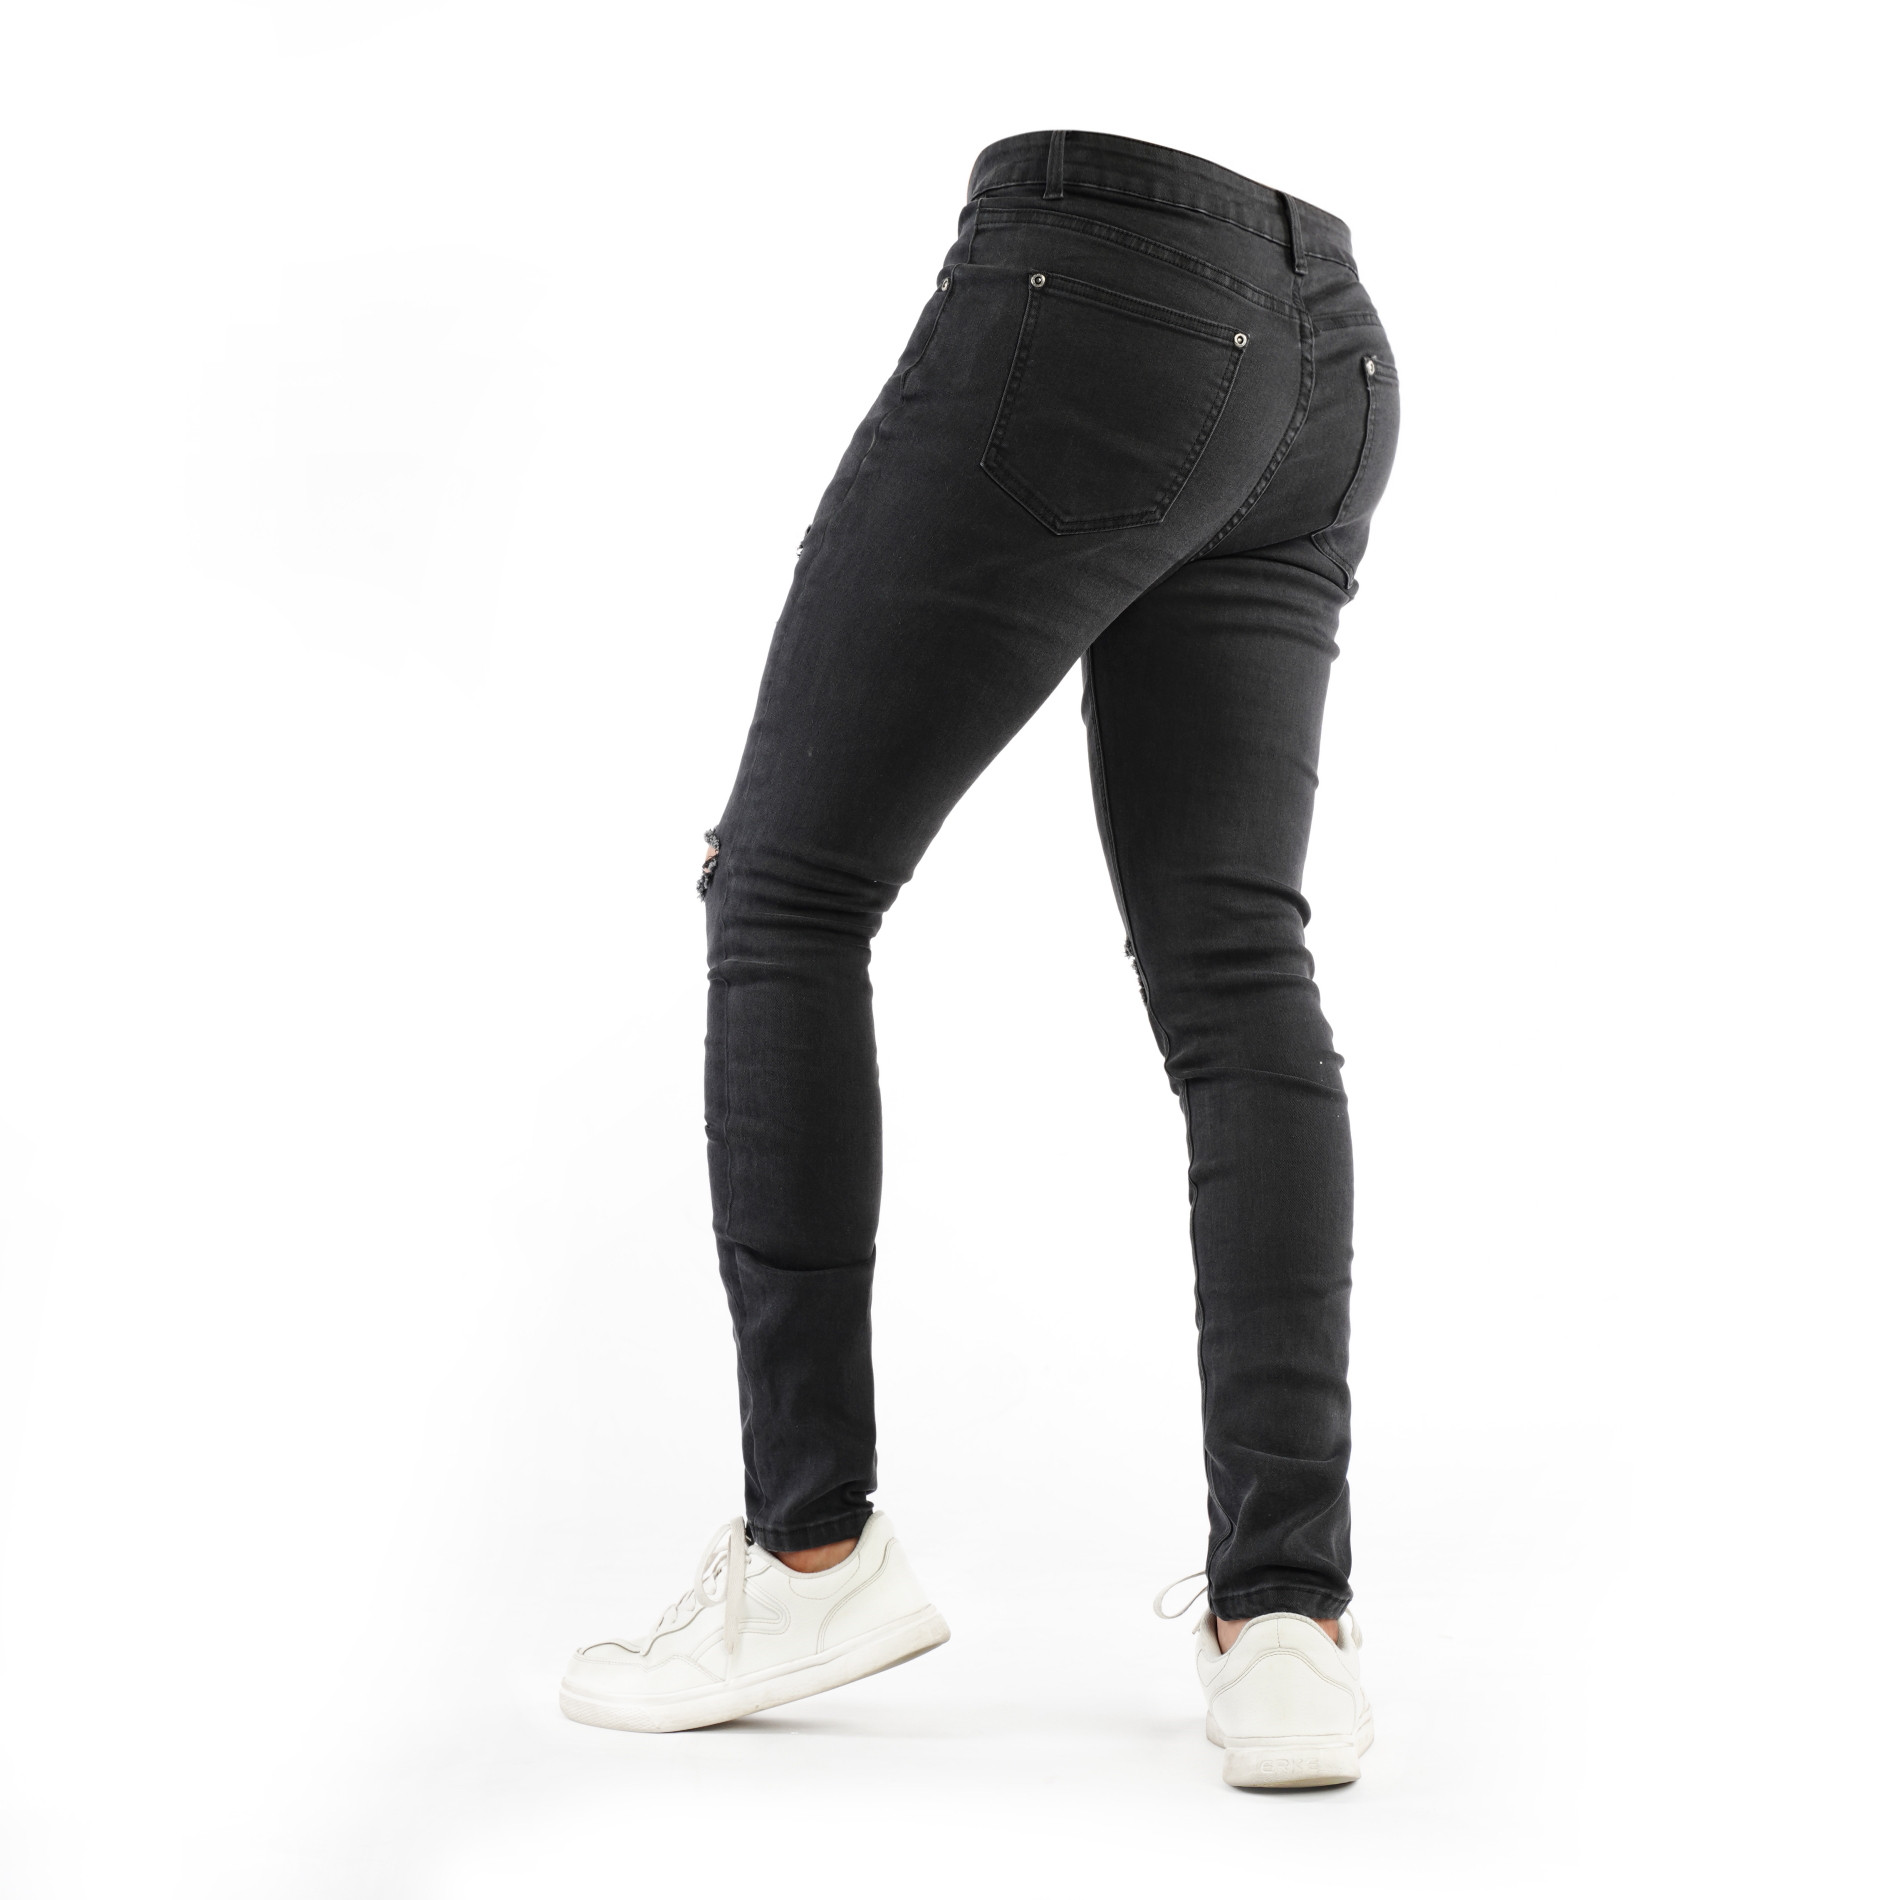 2020 new men's ripped skinny jeans stretch denim trousers high waist plus size fashion jean